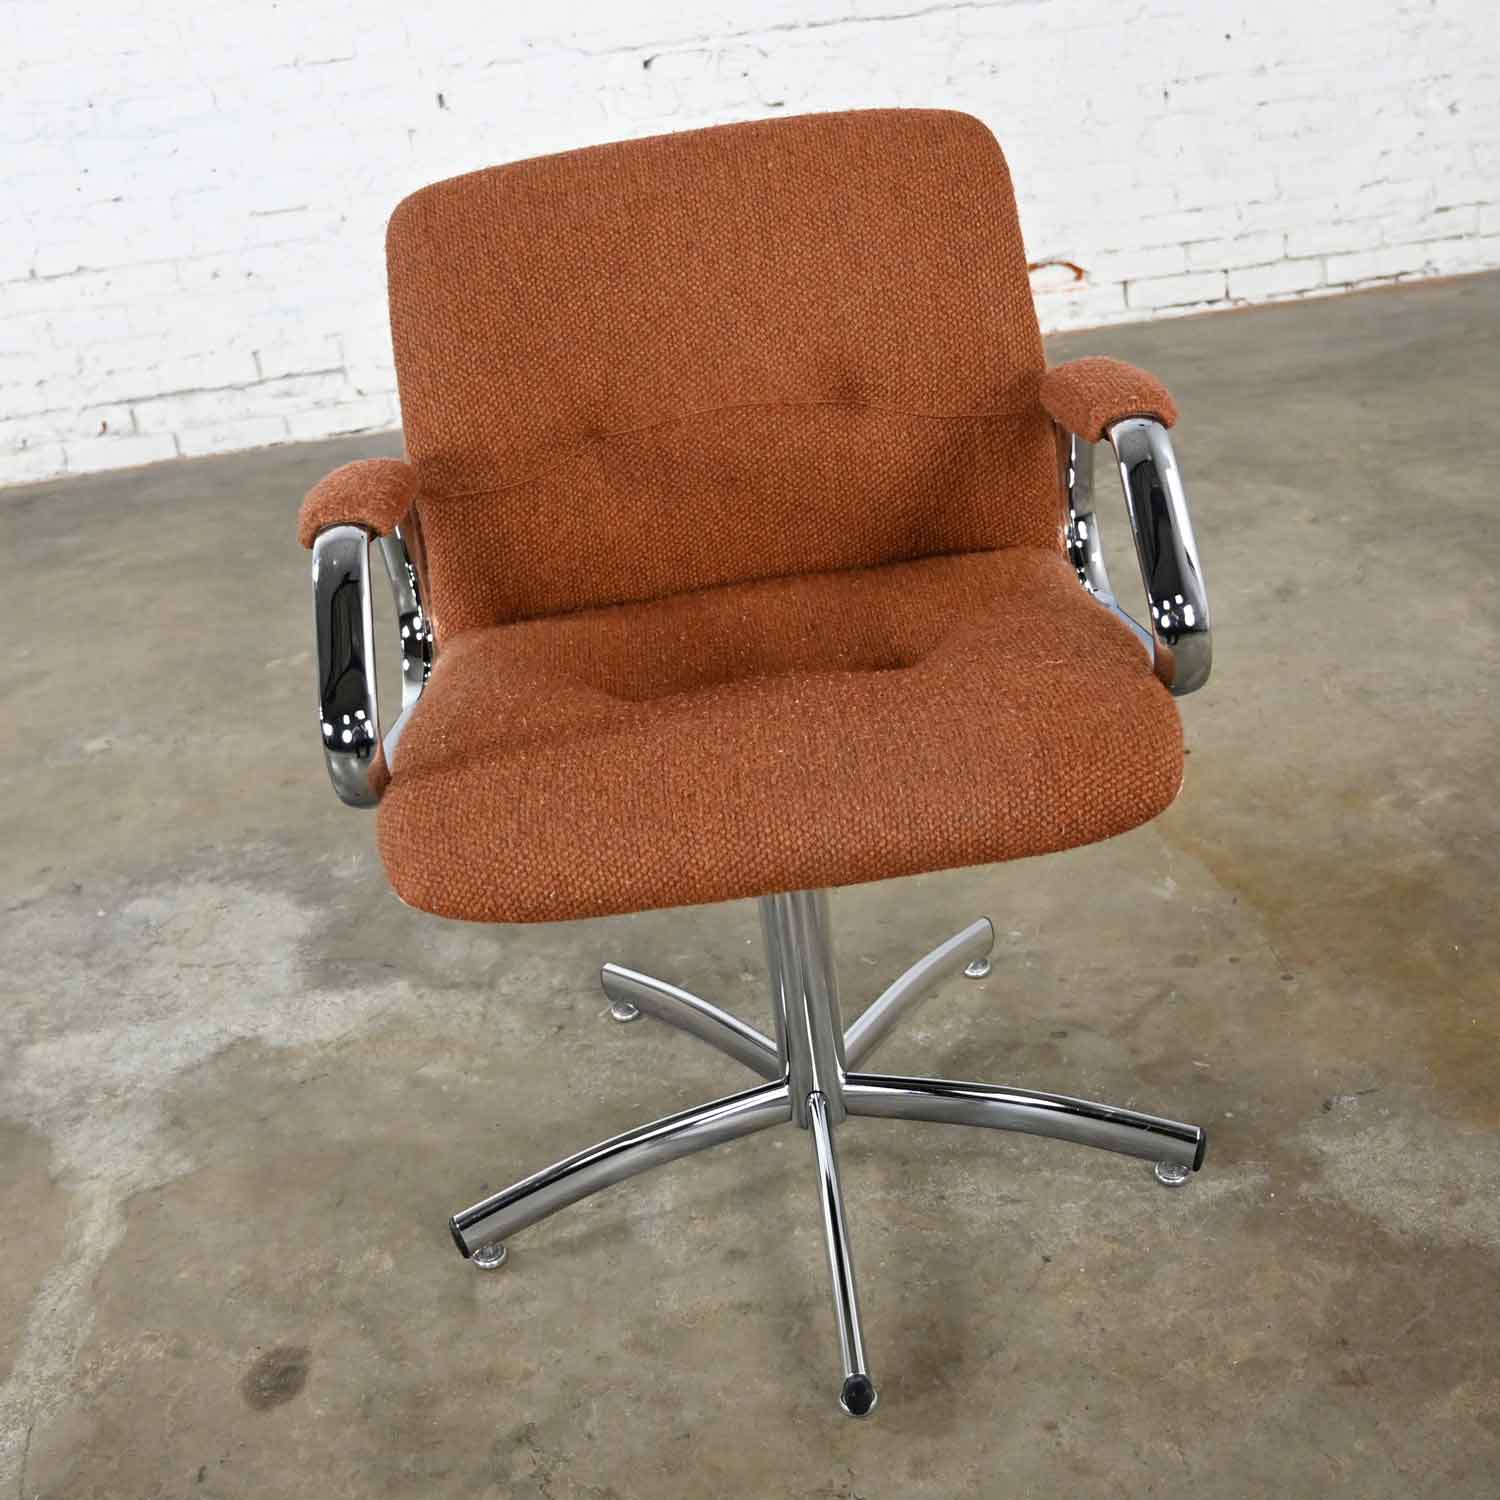 Steelcase Chrome & Original Brown Hopsack Upholstery Swivel Chair Model #454 Style Charles Pollock